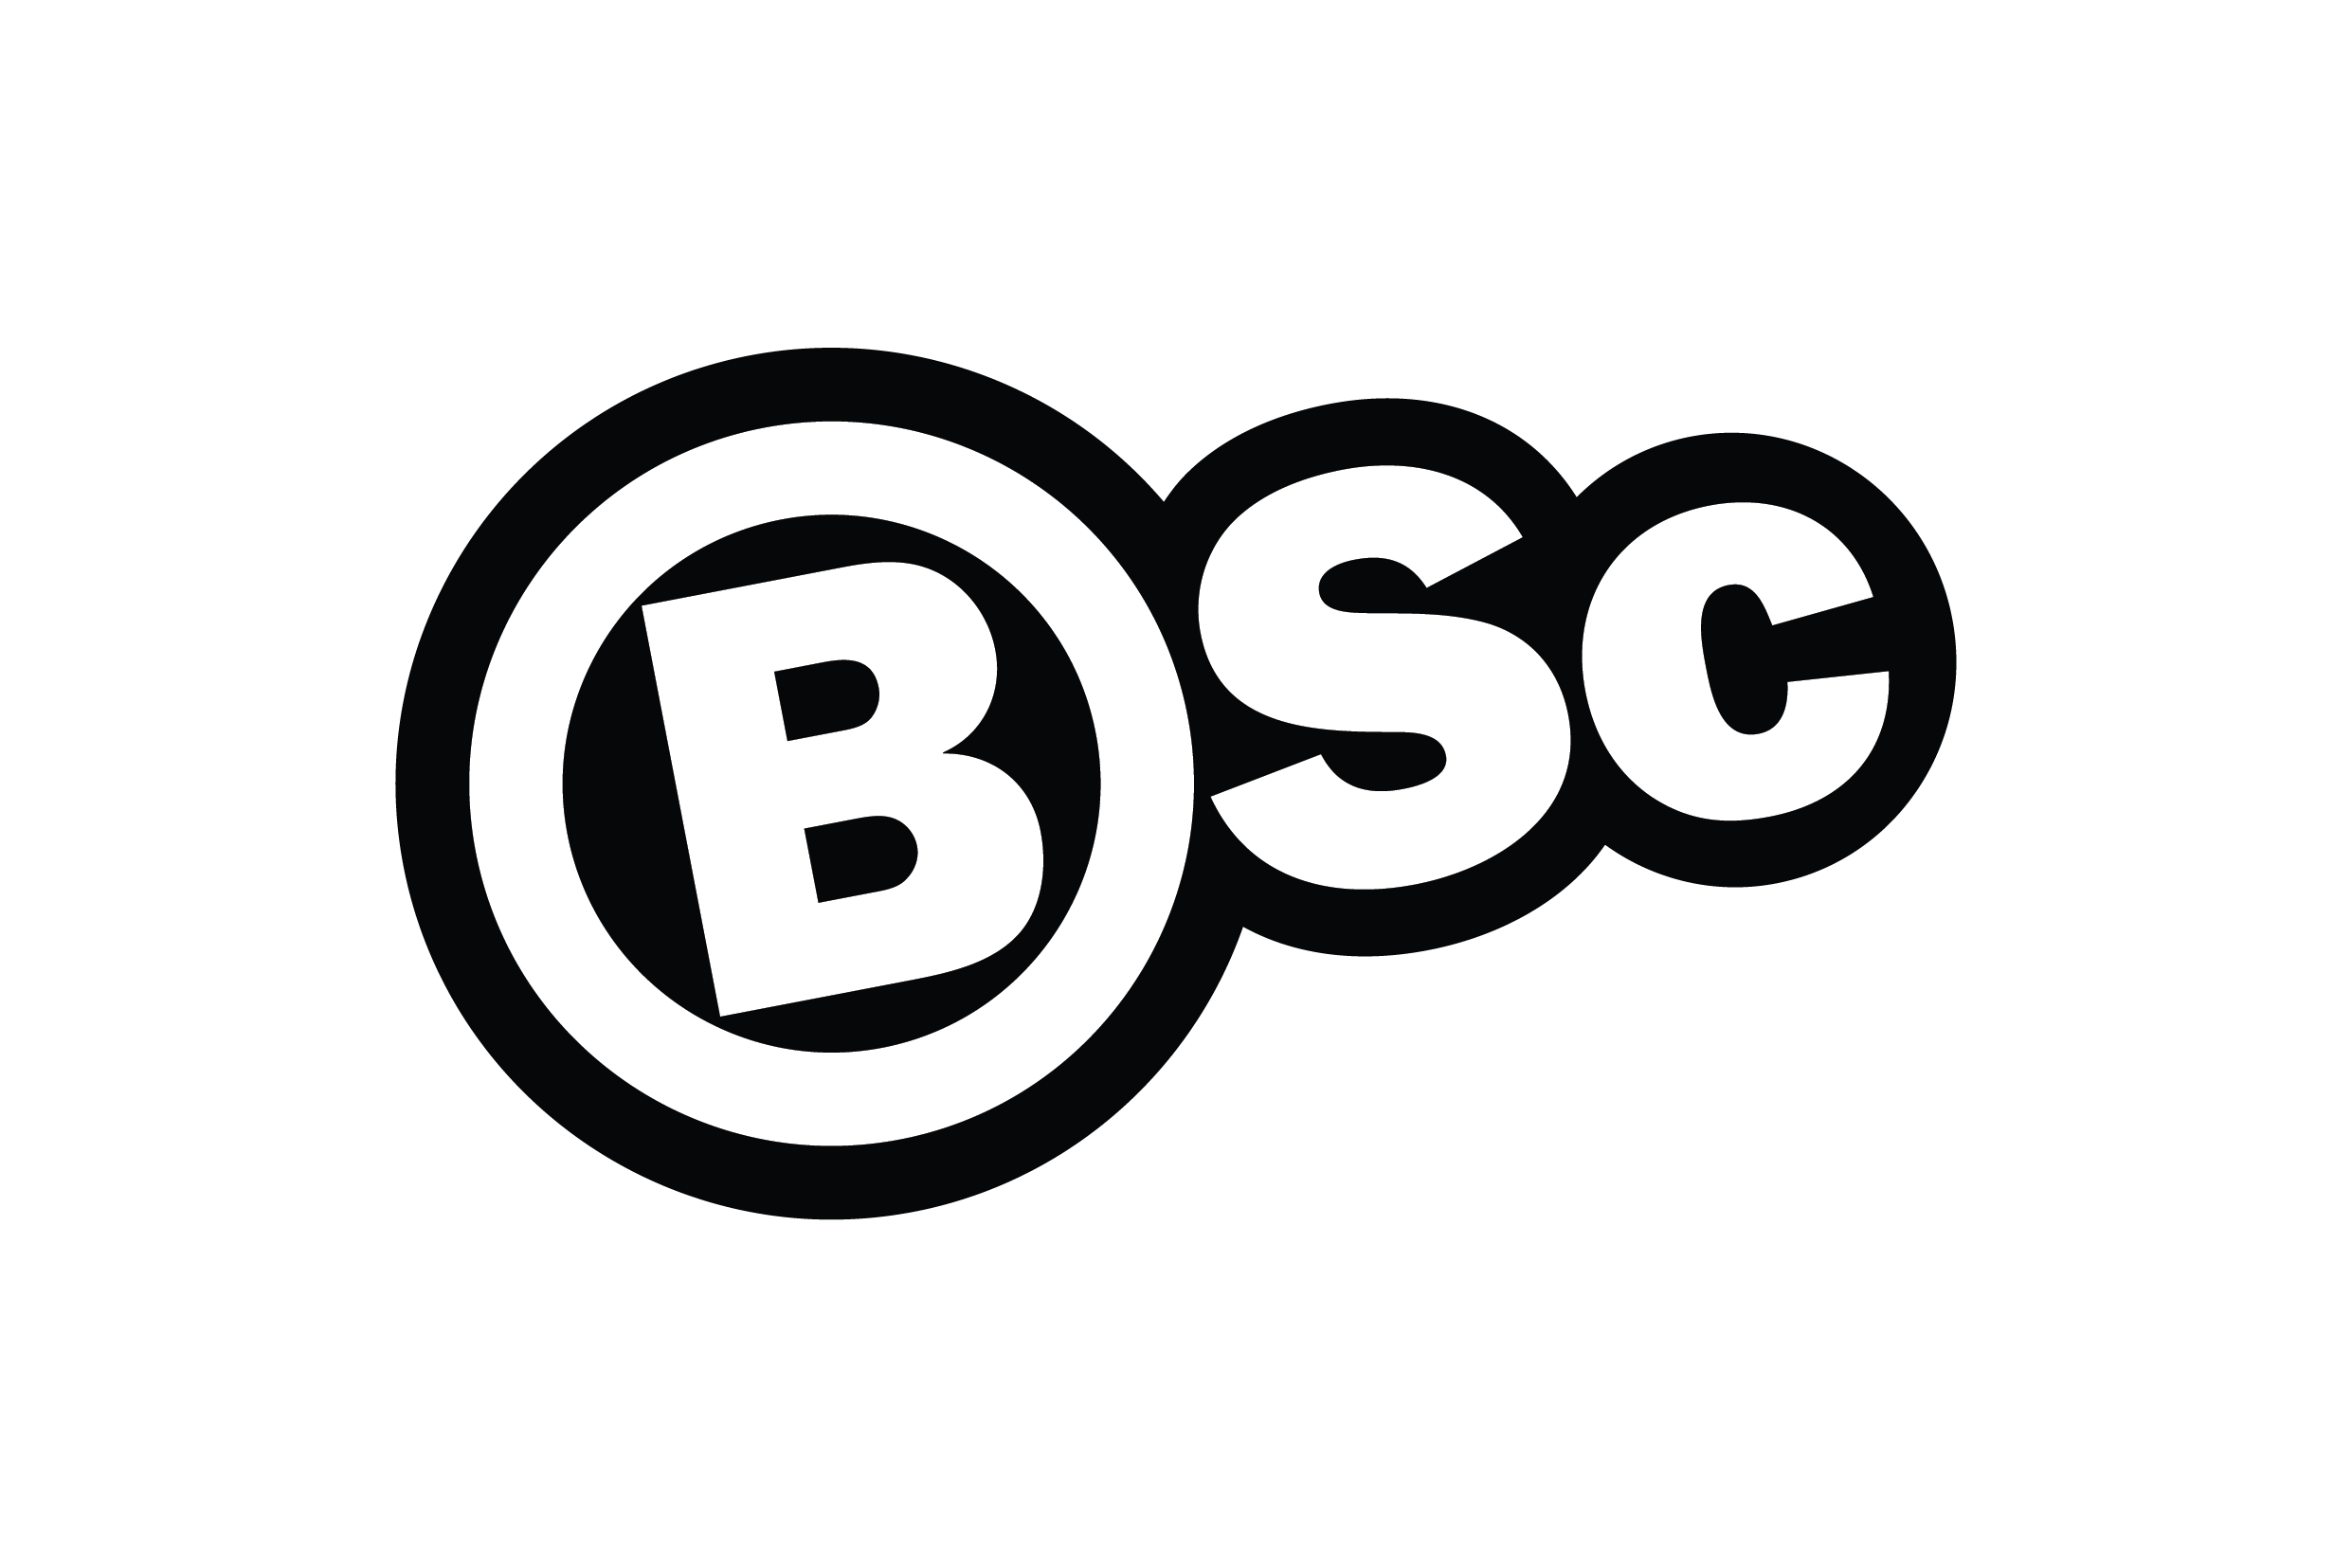 Barcelona SC logo, Vector Logo of Barcelona SC brand free download (eps,  ai, png, cdr) formats